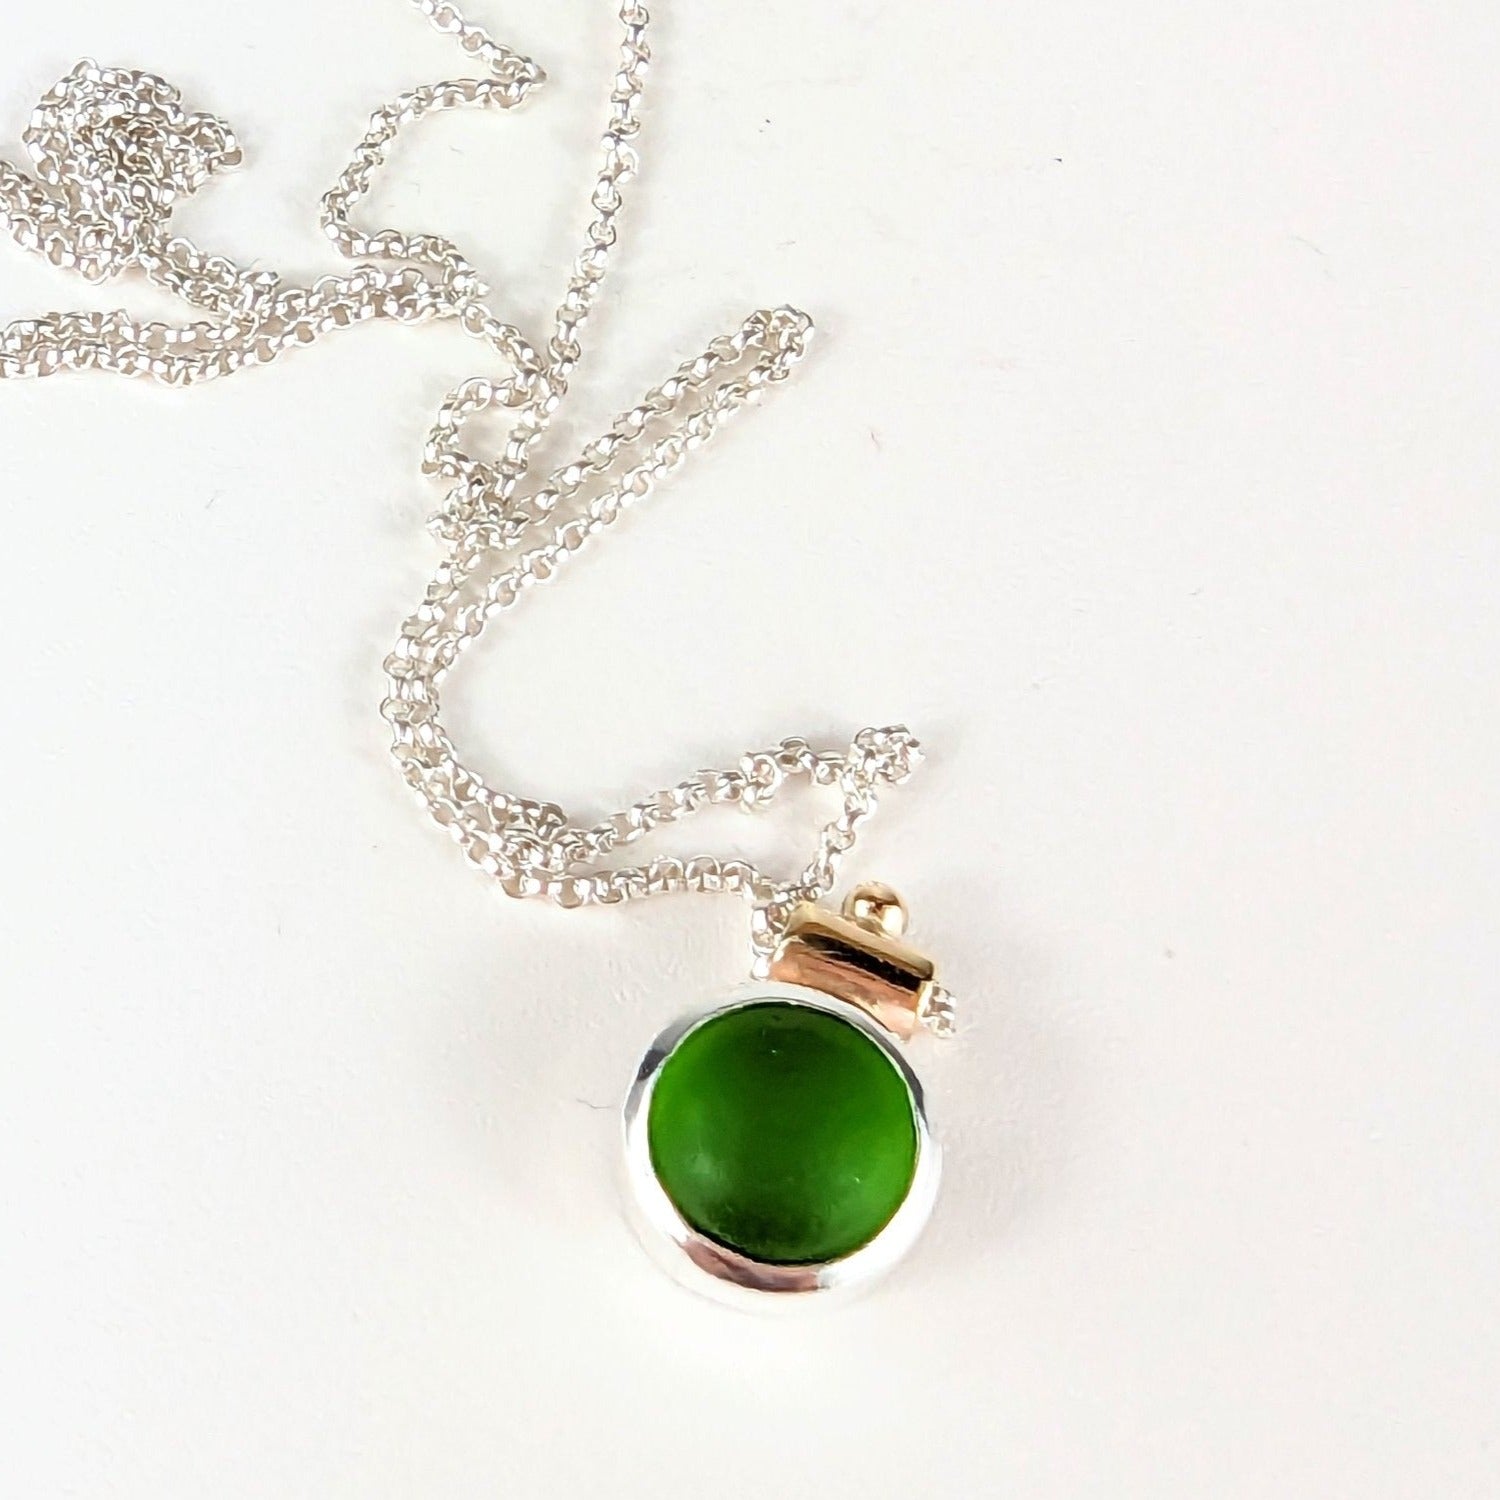 Vivid green sea glass necklace Limited ALLURE Collection - Booblinka Jewellery